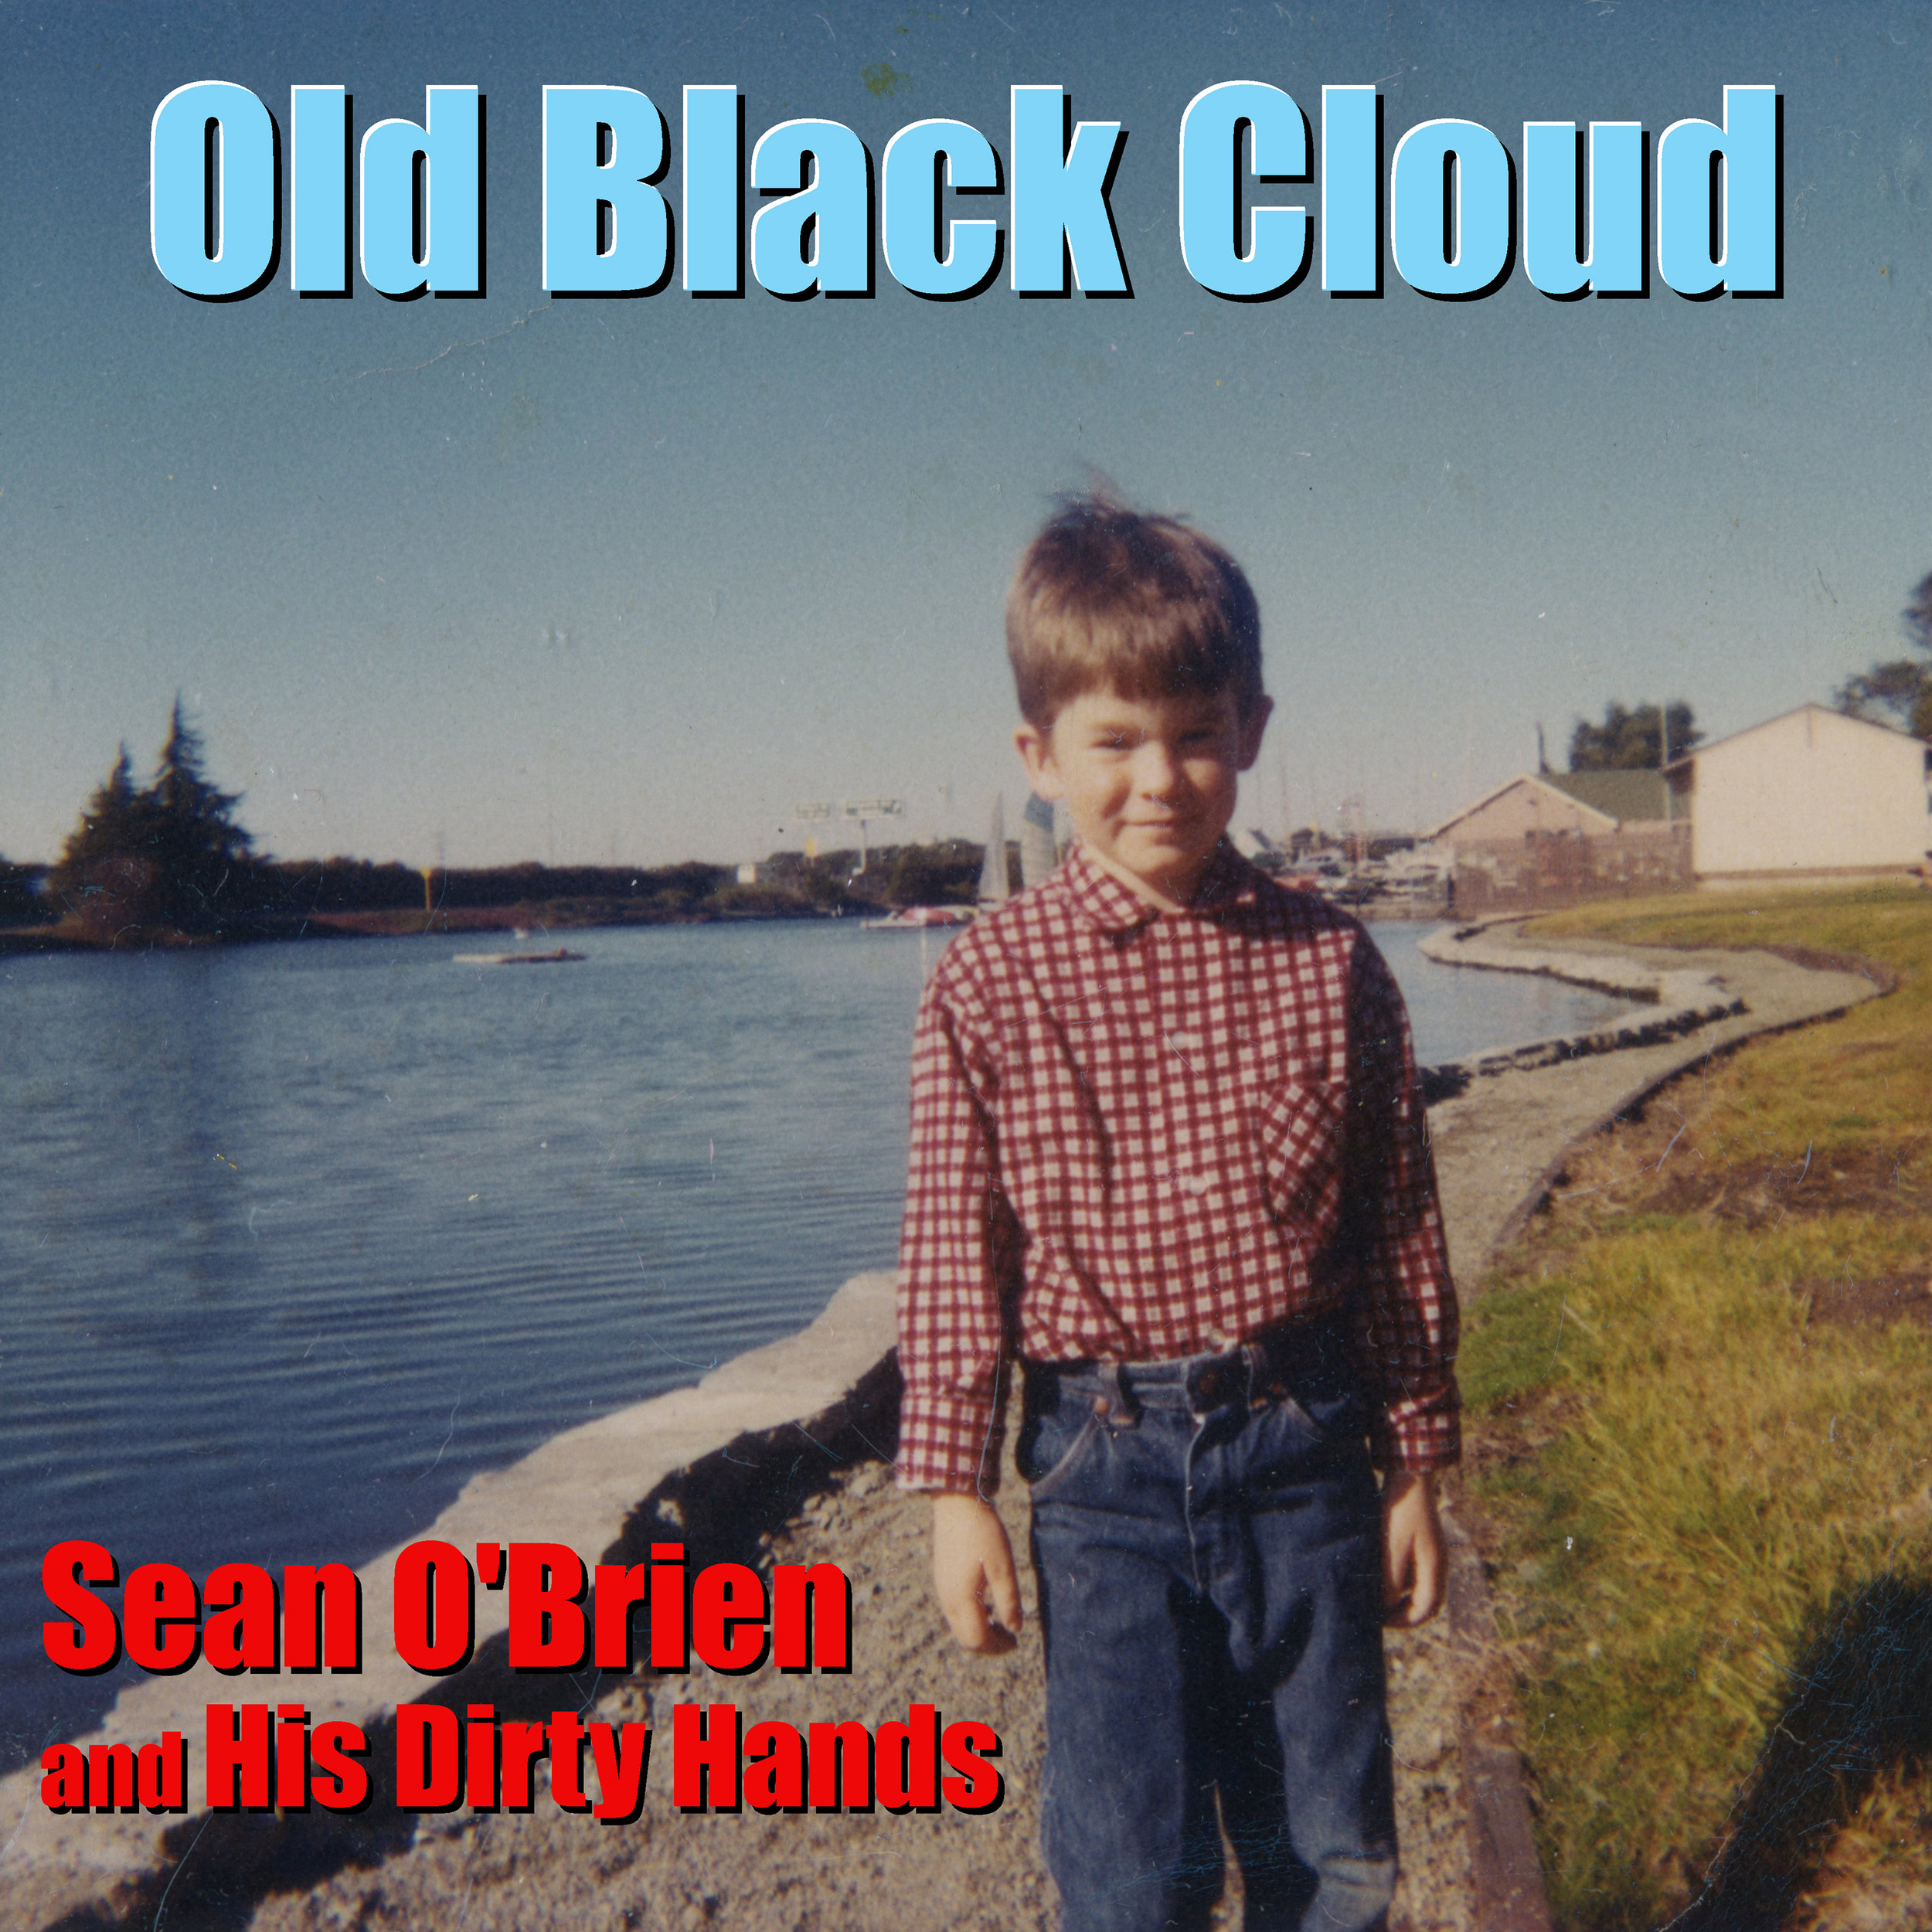 Old Black Cloud - Digital single cover